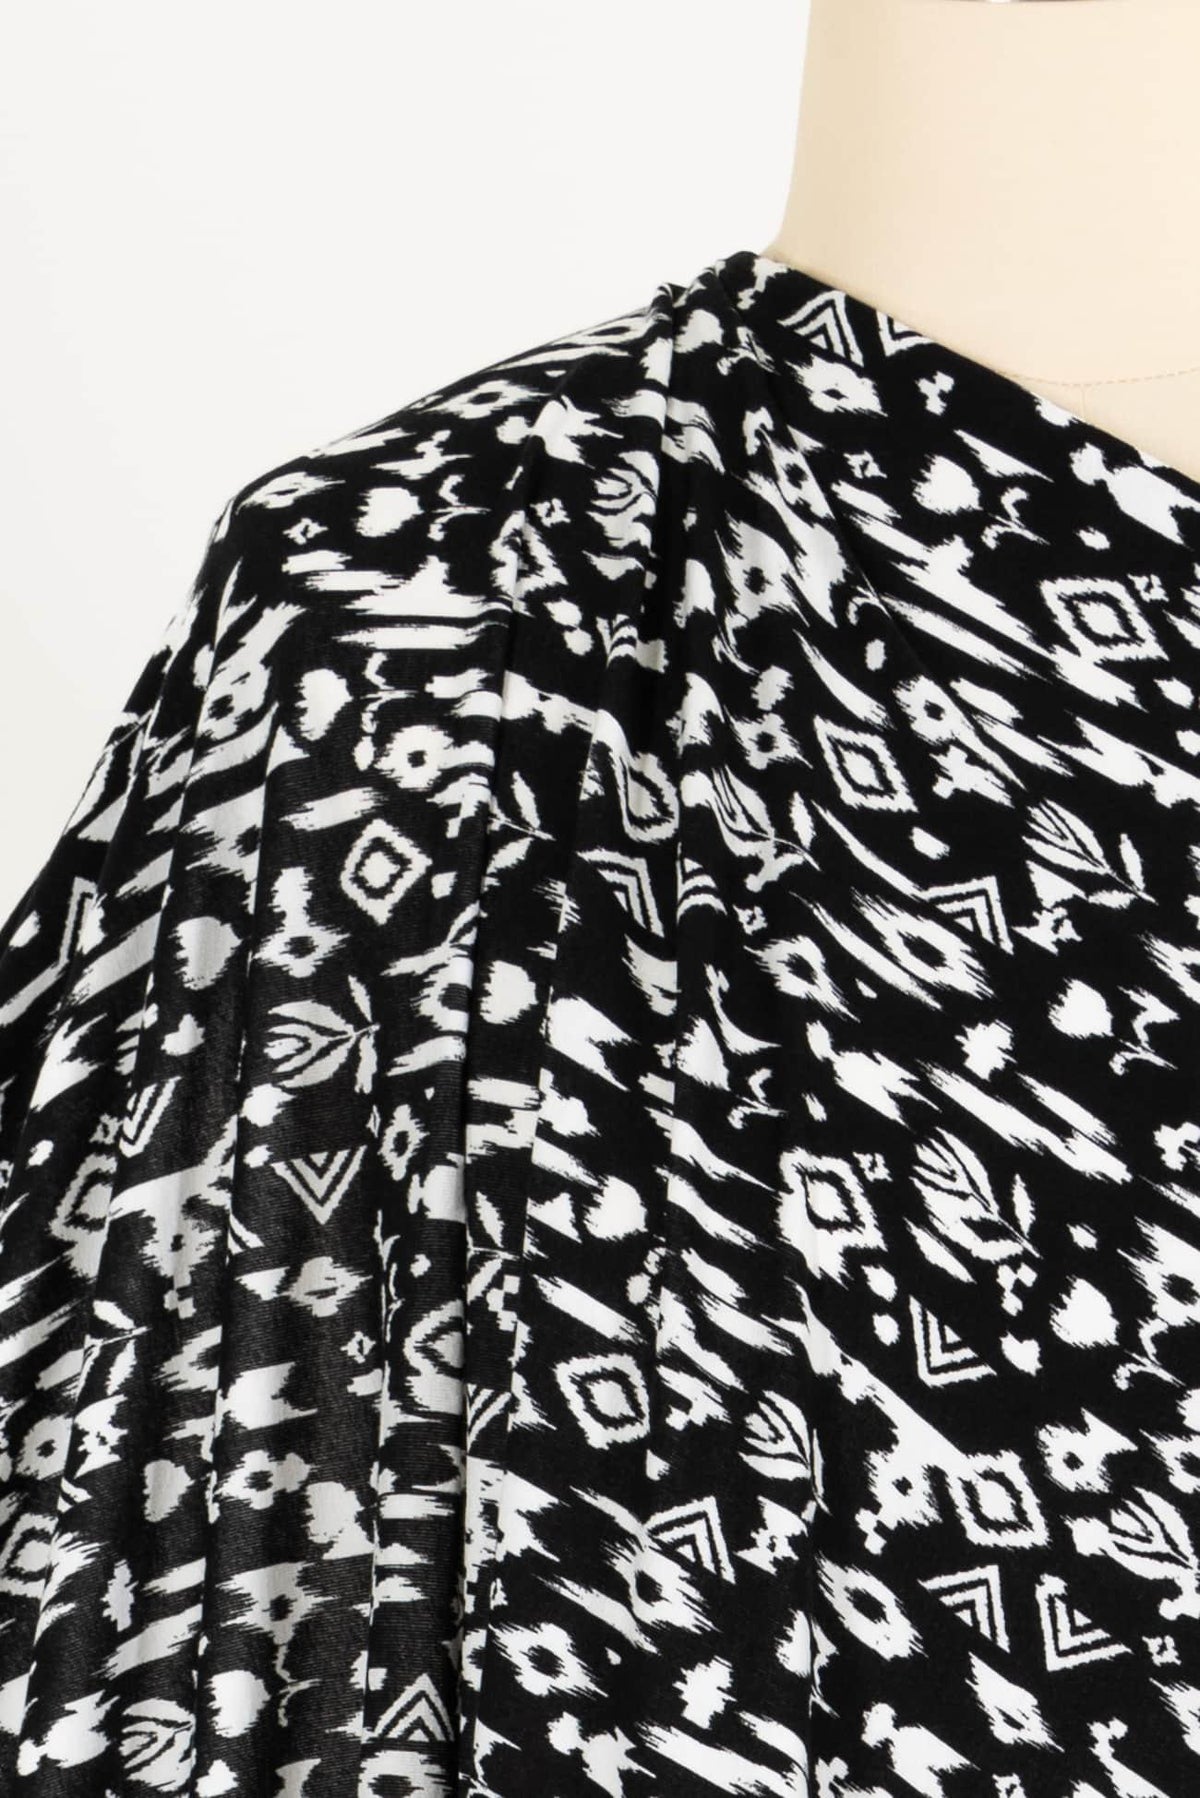 Tangier Viscose Knit - Marcy Tilton Fabrics